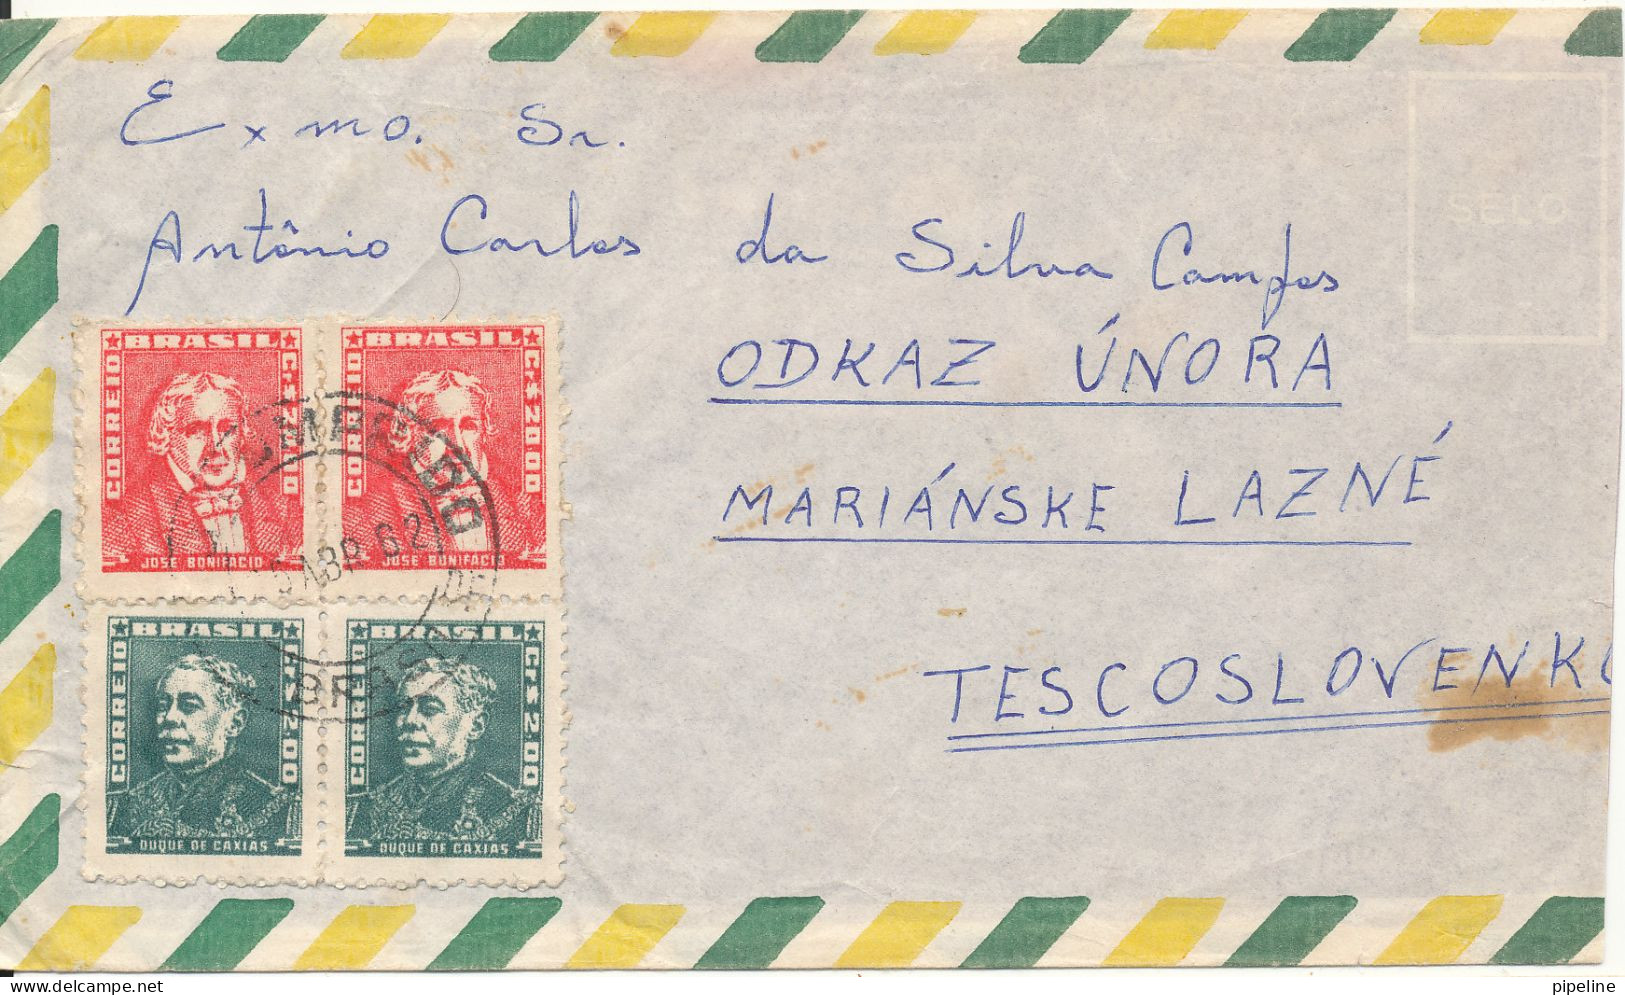 Brazil Air Mail Cover Sent To Czechoslovakia 26-4-1962 - Poste Aérienne